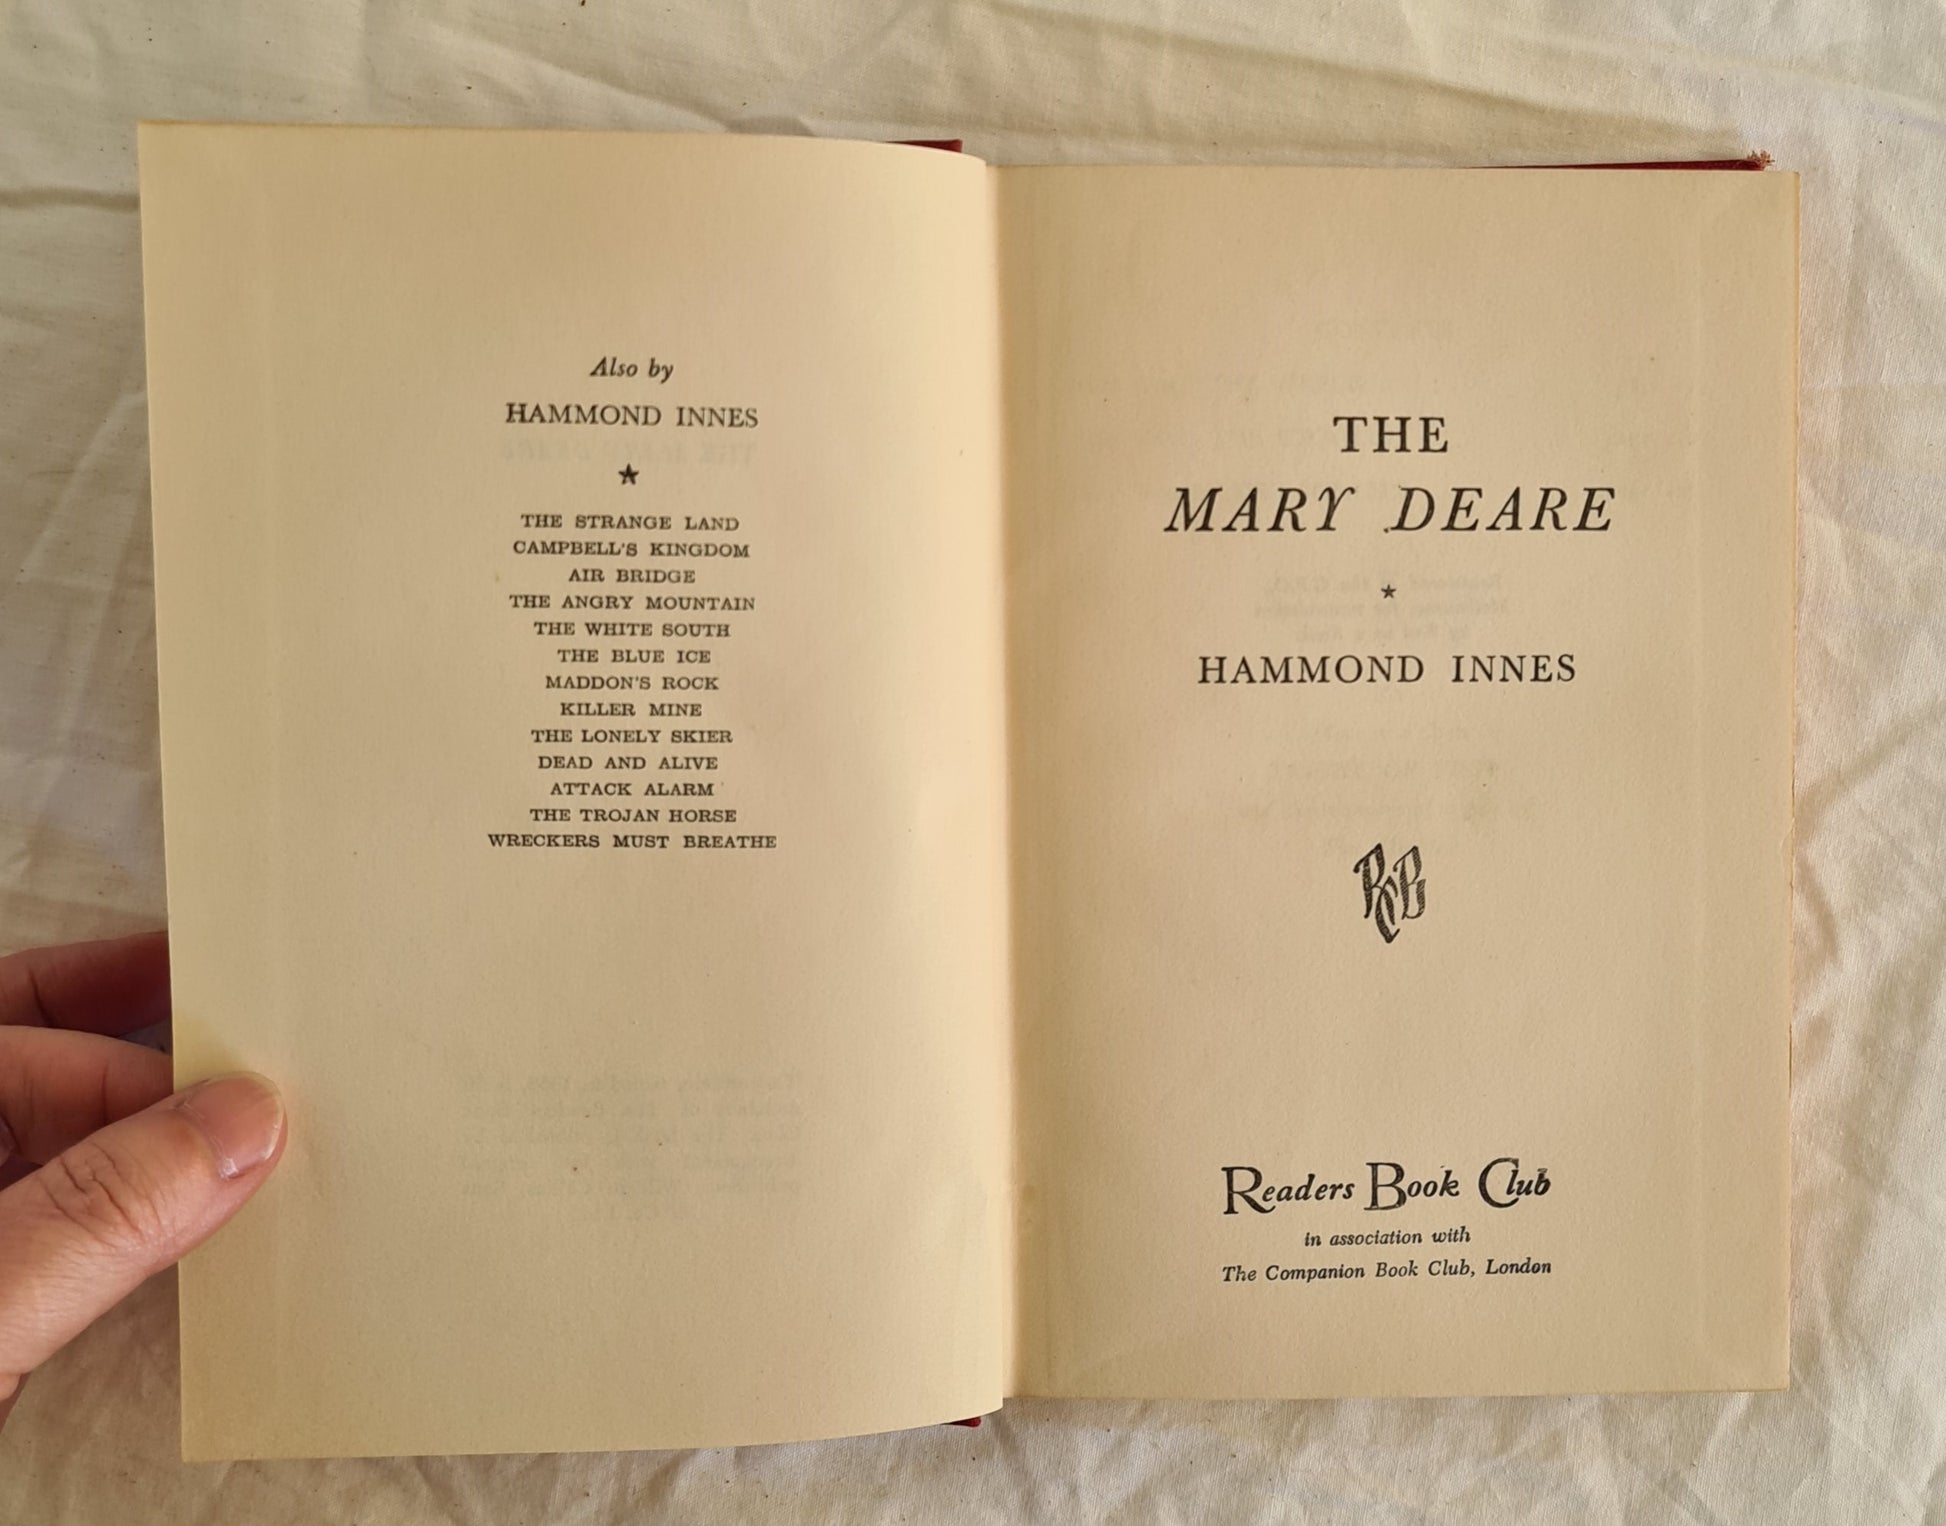 The Mary Deare by Hammond Innes